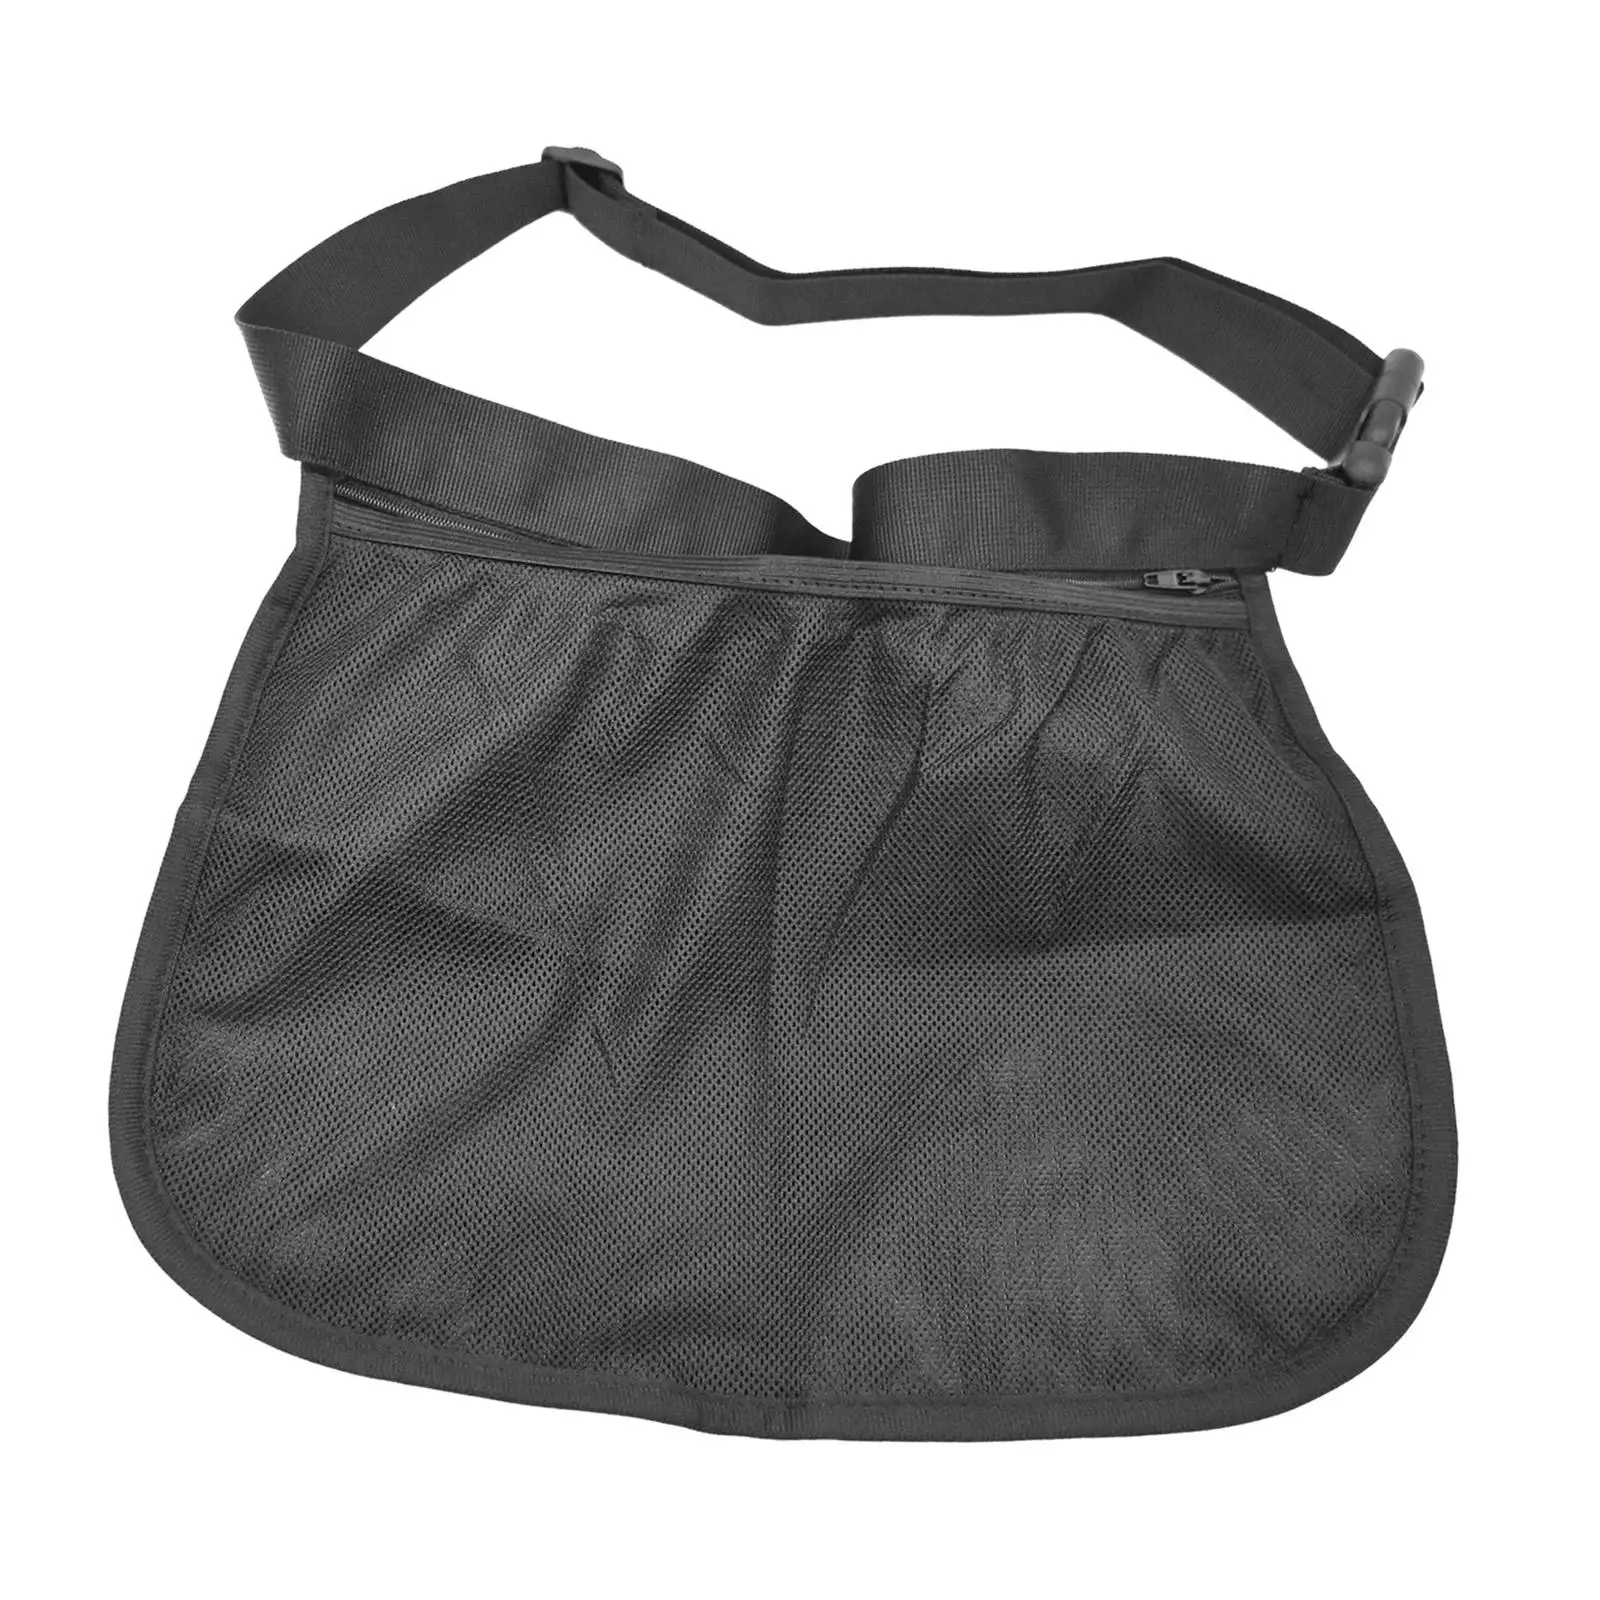 Black Tennis Ball Holder Tennis Ball Storage Bag Carrier Waist Pocket Gadgets Mesh Storage Bag for Storing Balls and Phones